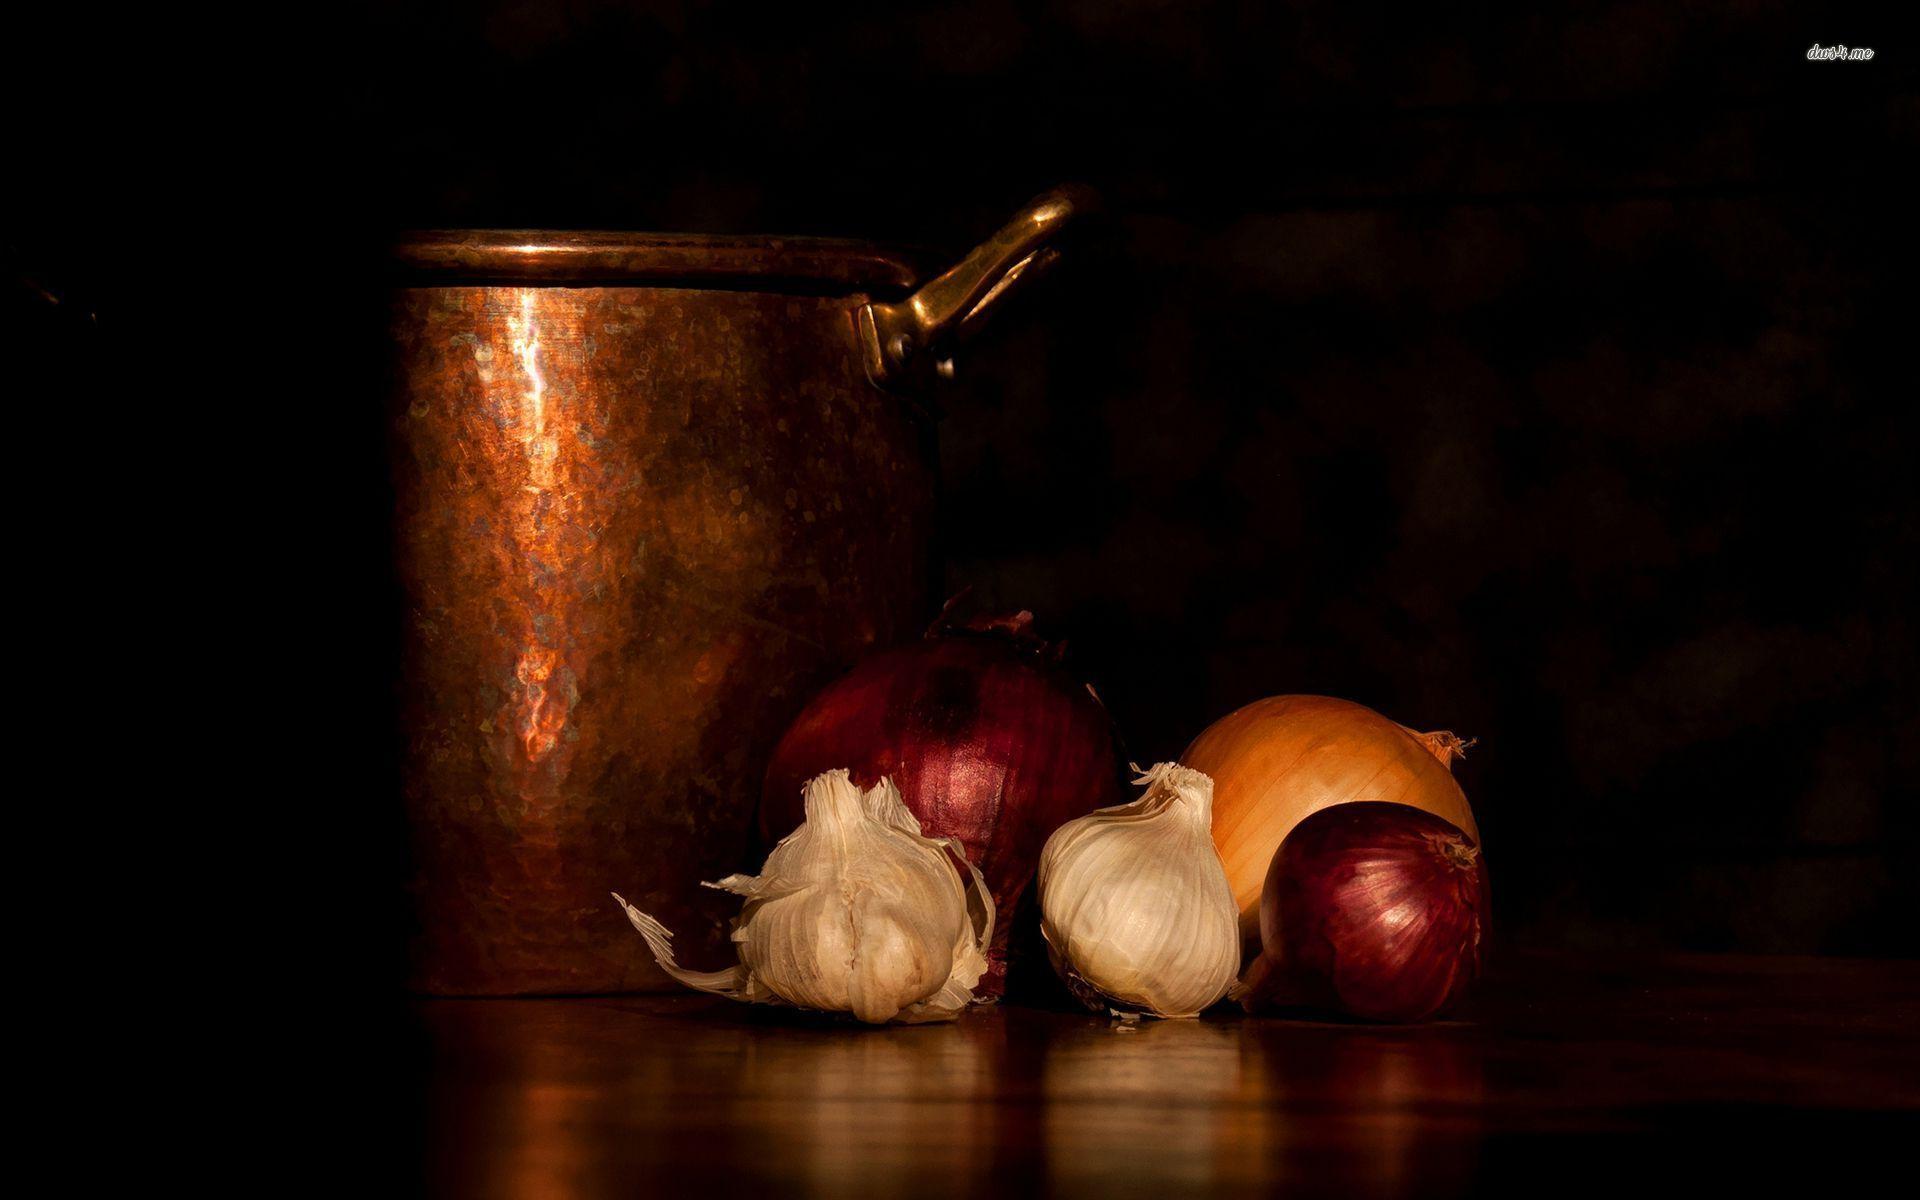 Onions and garlic wallpaper wallpaper